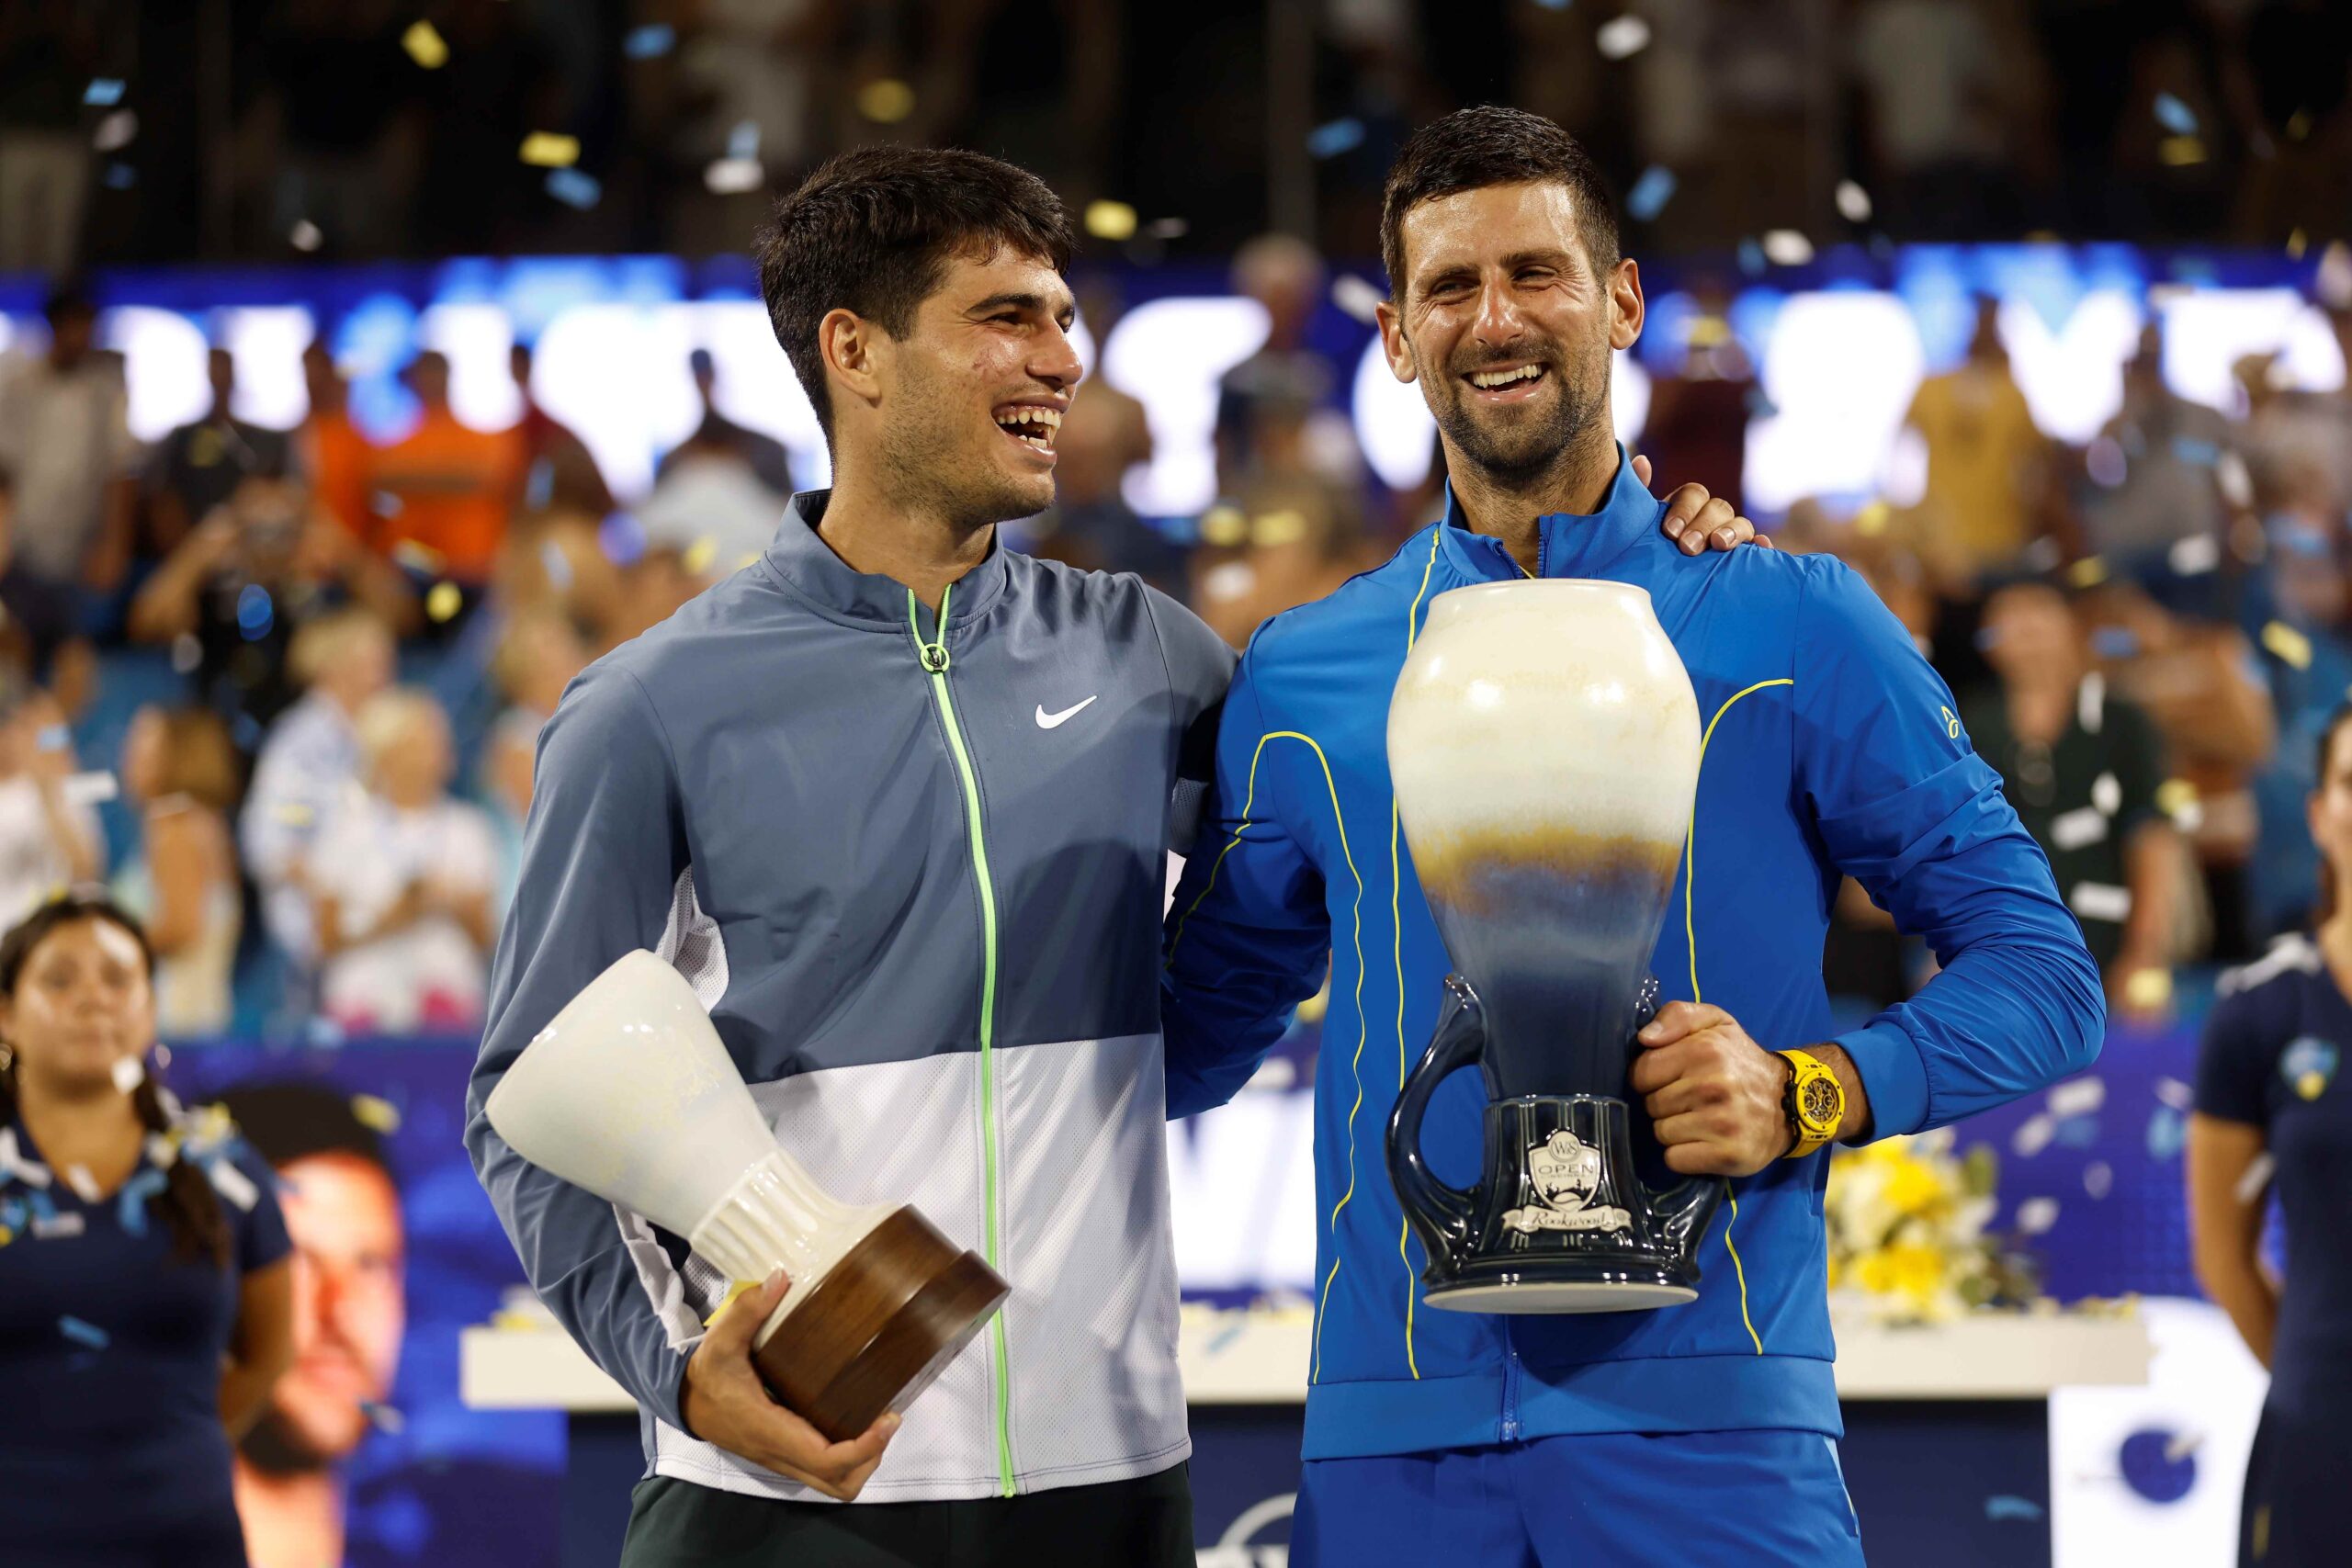 Novak Djokovic and Carlos Alcarz